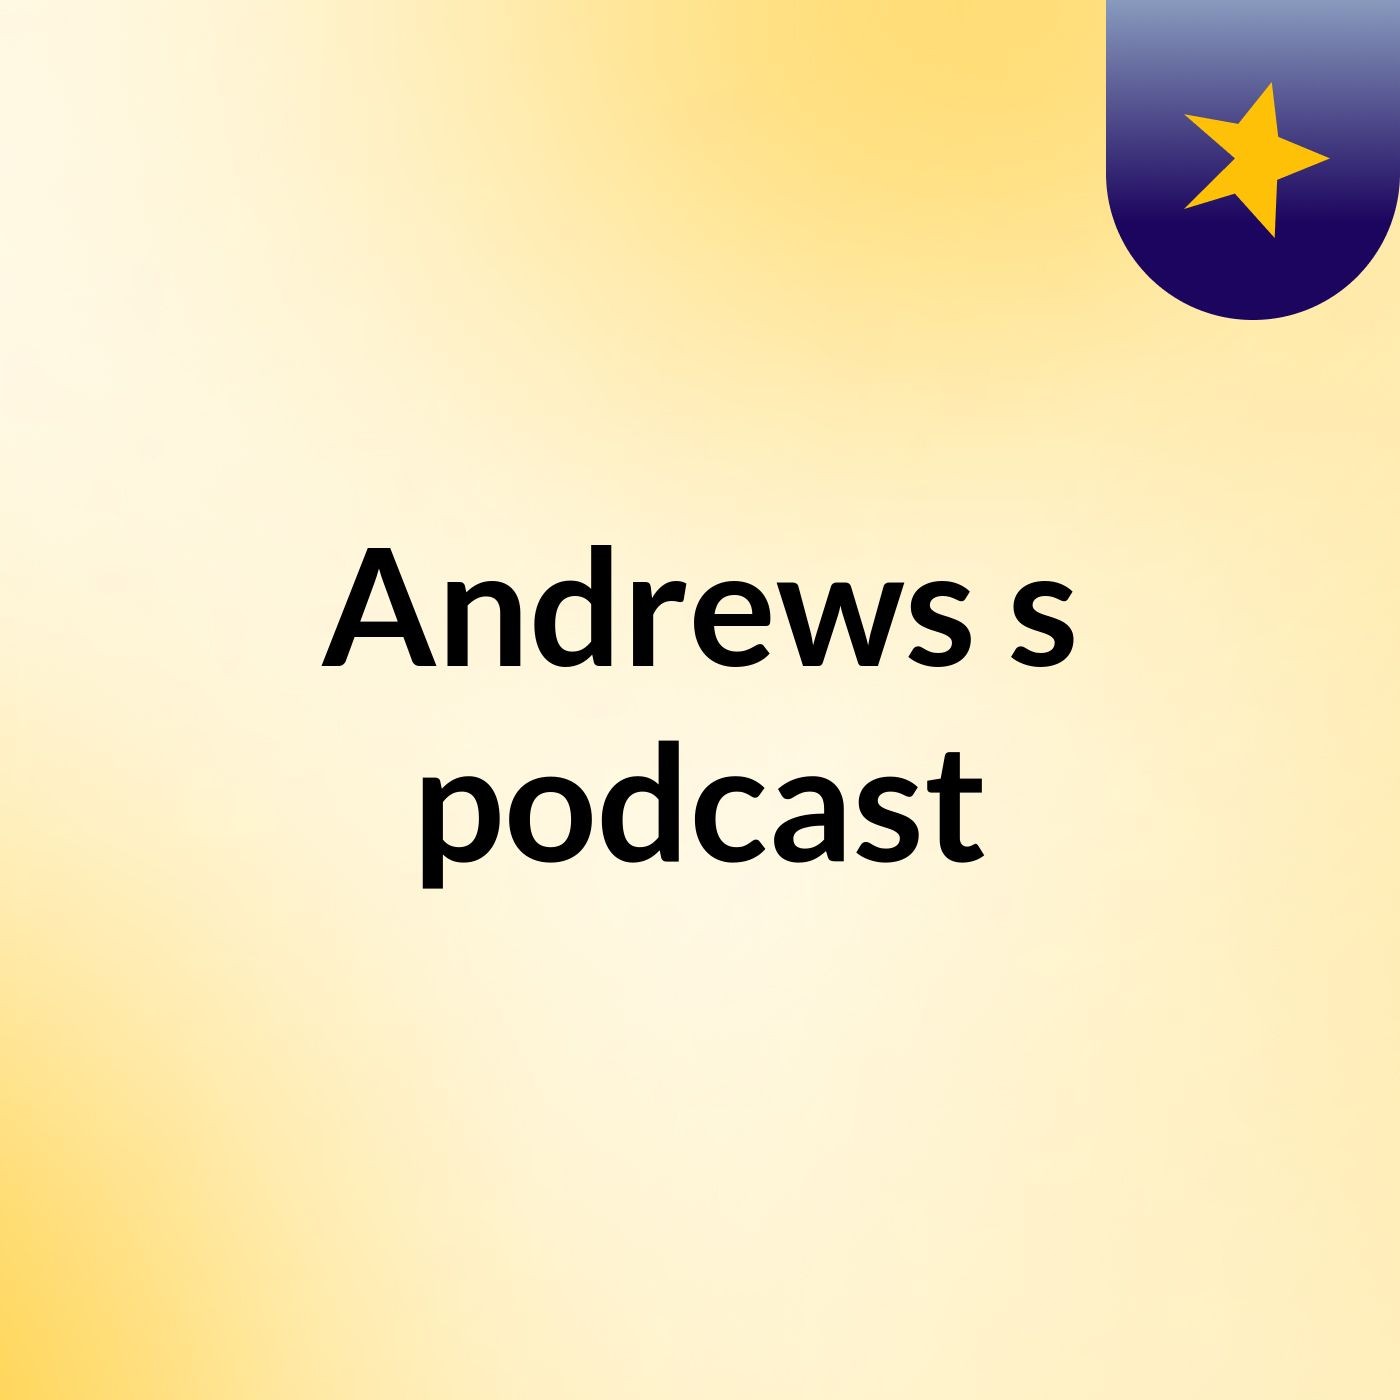 Episode 3 - Andrews's podcast